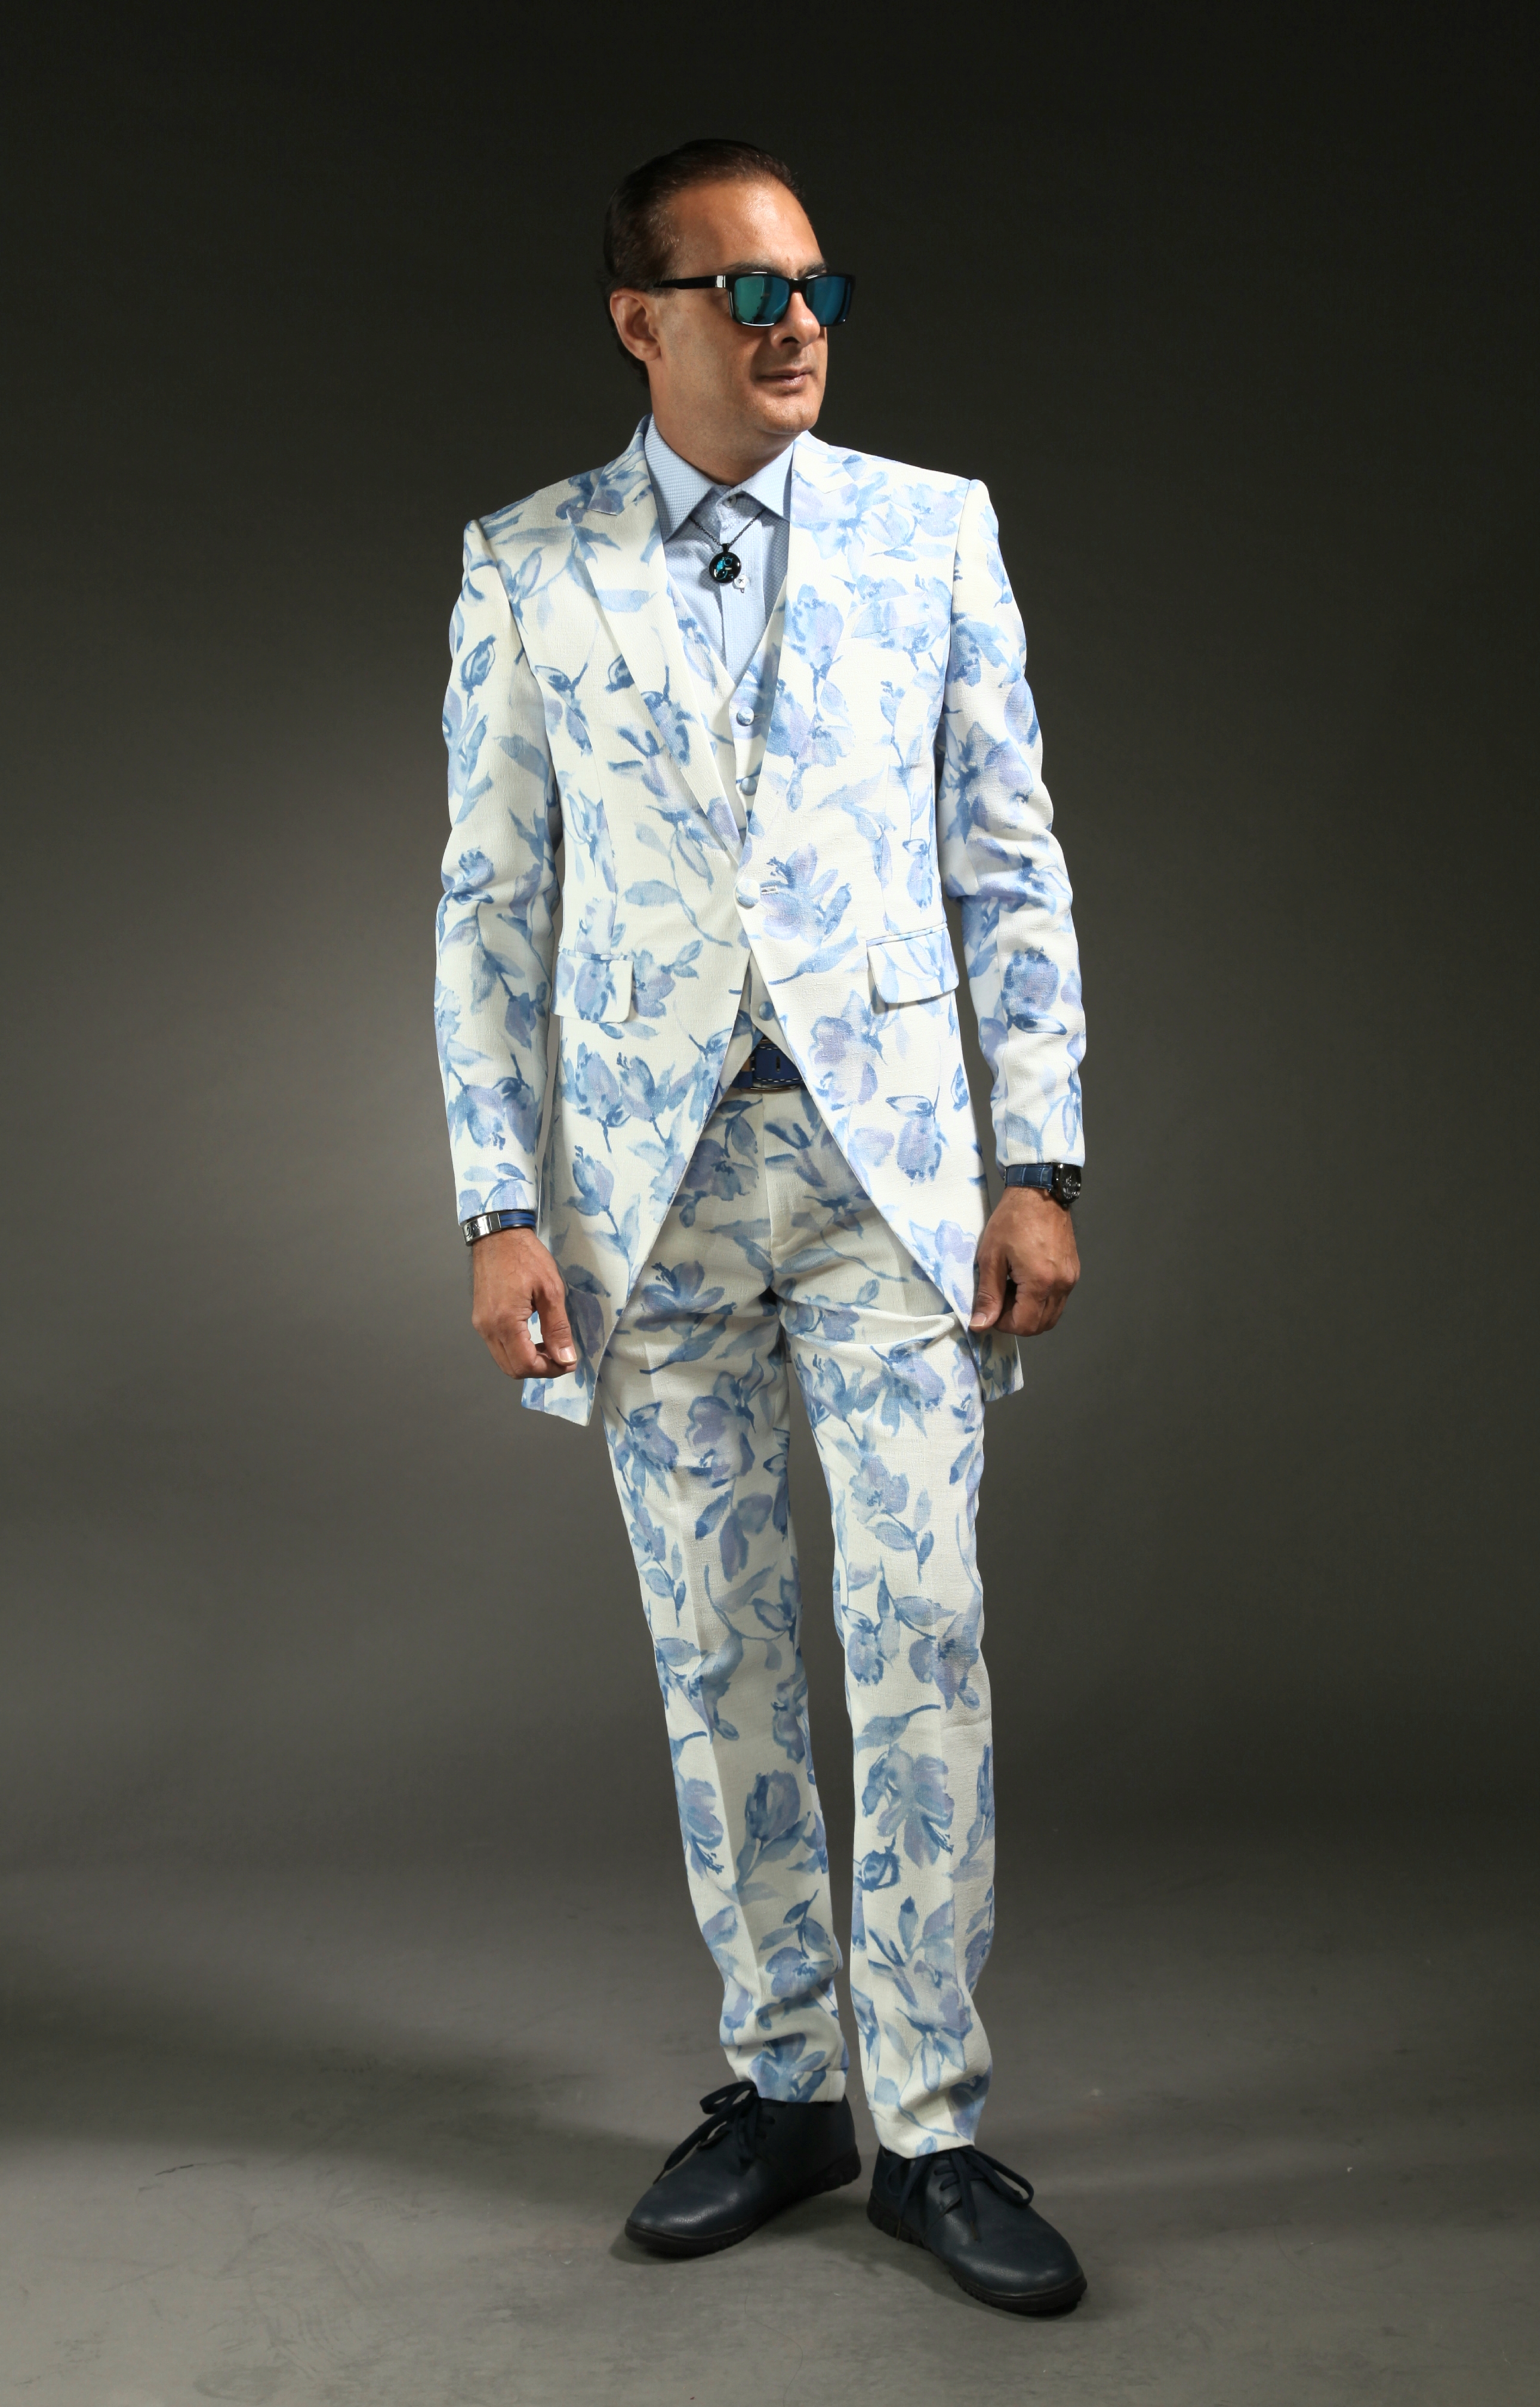 Suit Rental Suits Rent Hire Designer My Singapore Tailor Tailors Rentals Shop Tuxedo Black Tie Wedding Formal 55